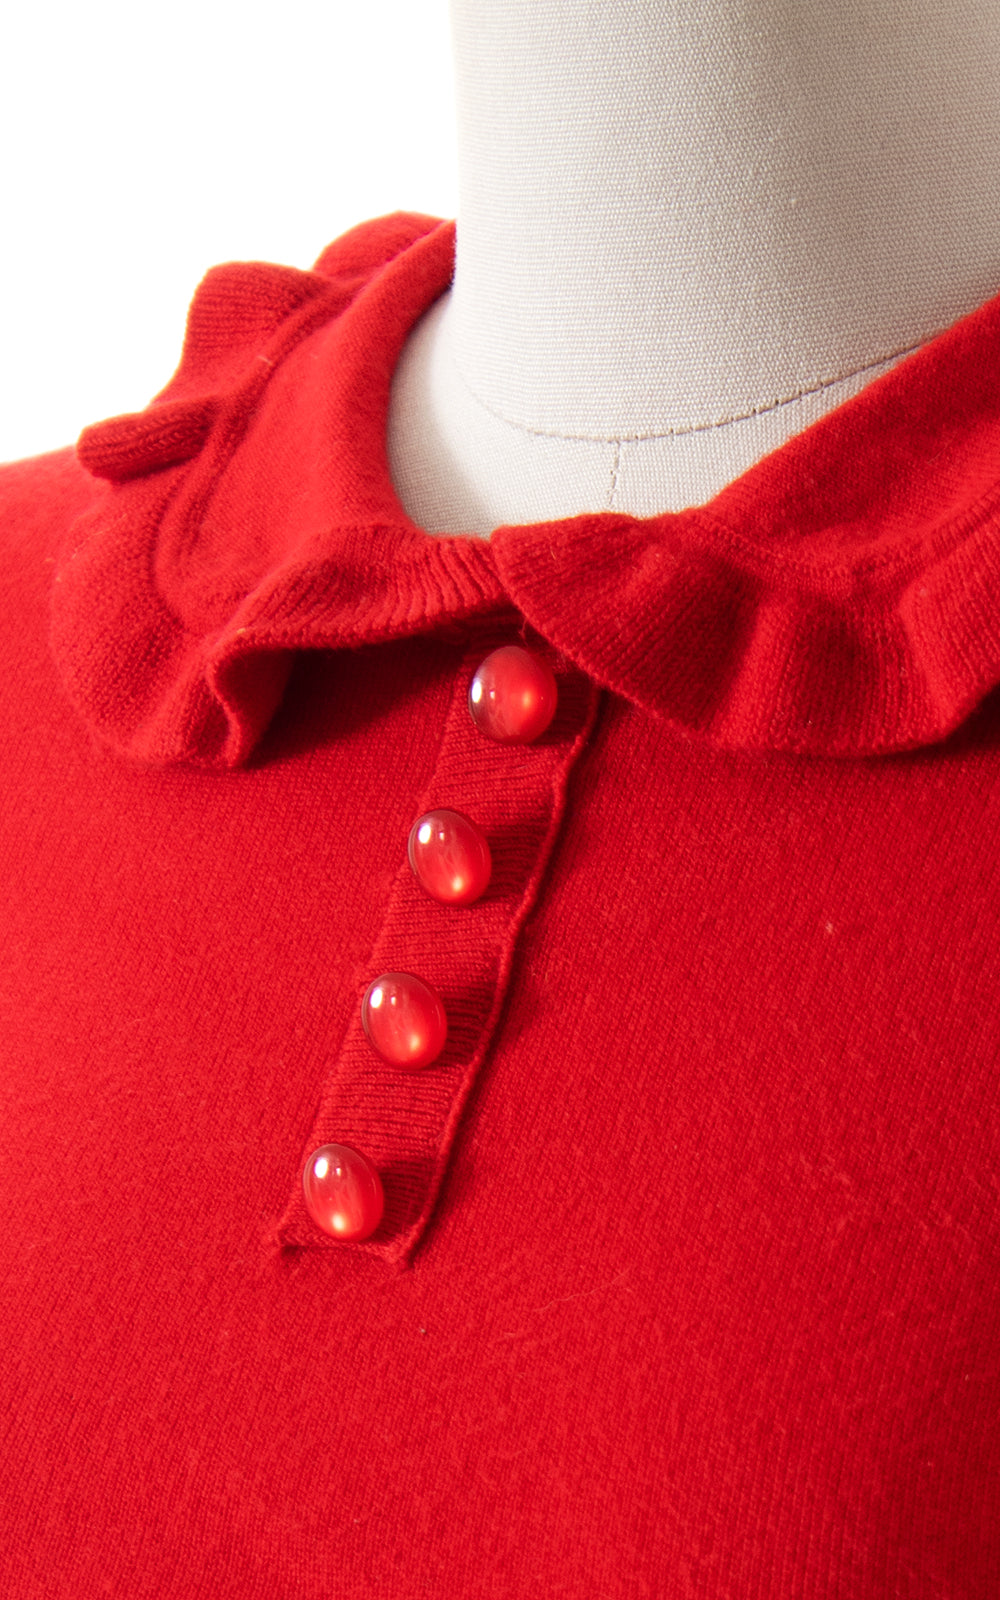 Vintage Red Knit Sweater BirthdayLifeVintage